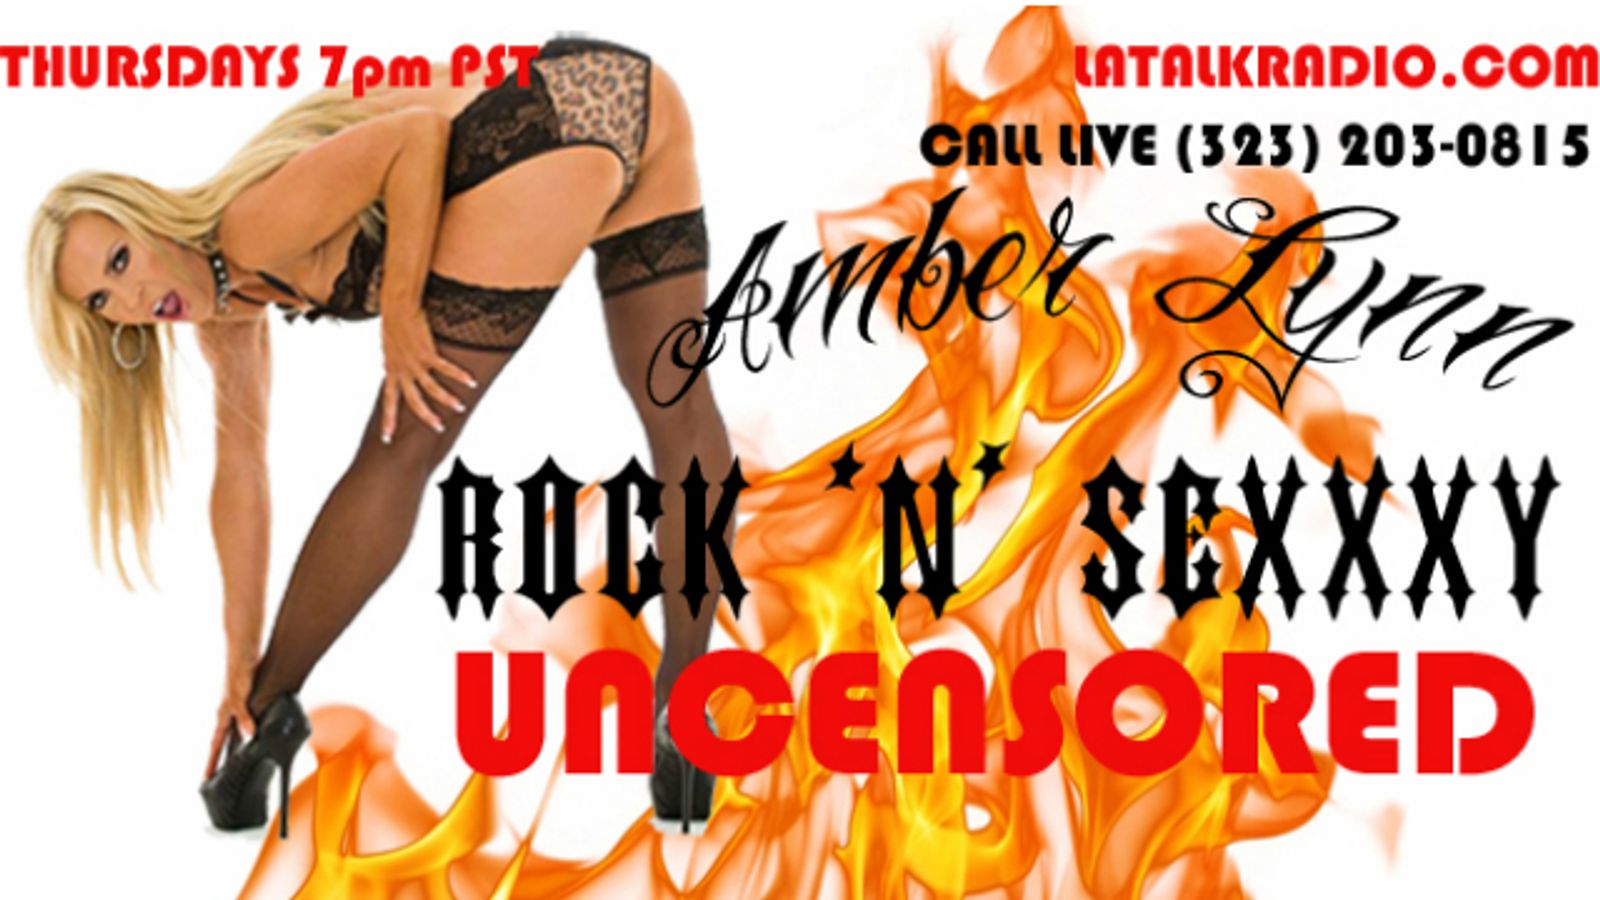 Tera Patrick, Jayden Lee On Rock 'n' Sexxxy Uncensored Thursday